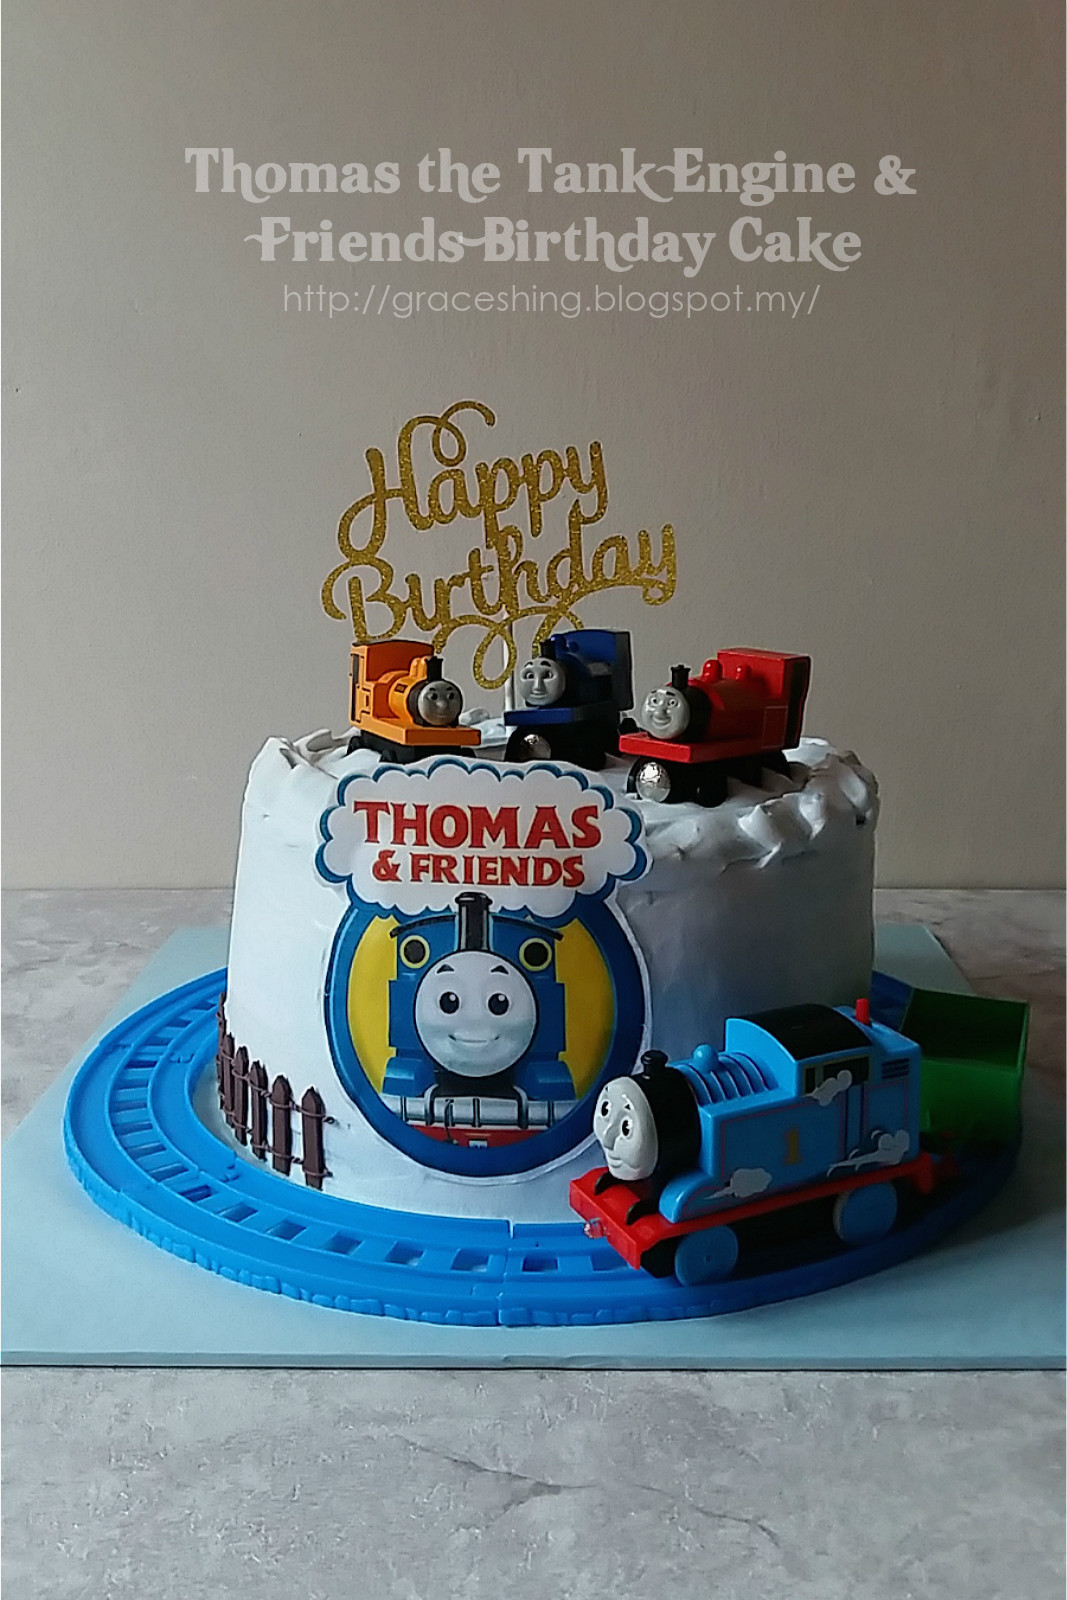 Grace's Blog 欣语心情: 托马斯小火车生日蛋糕 Thomas the Tank Engine & Friends Birthday ...